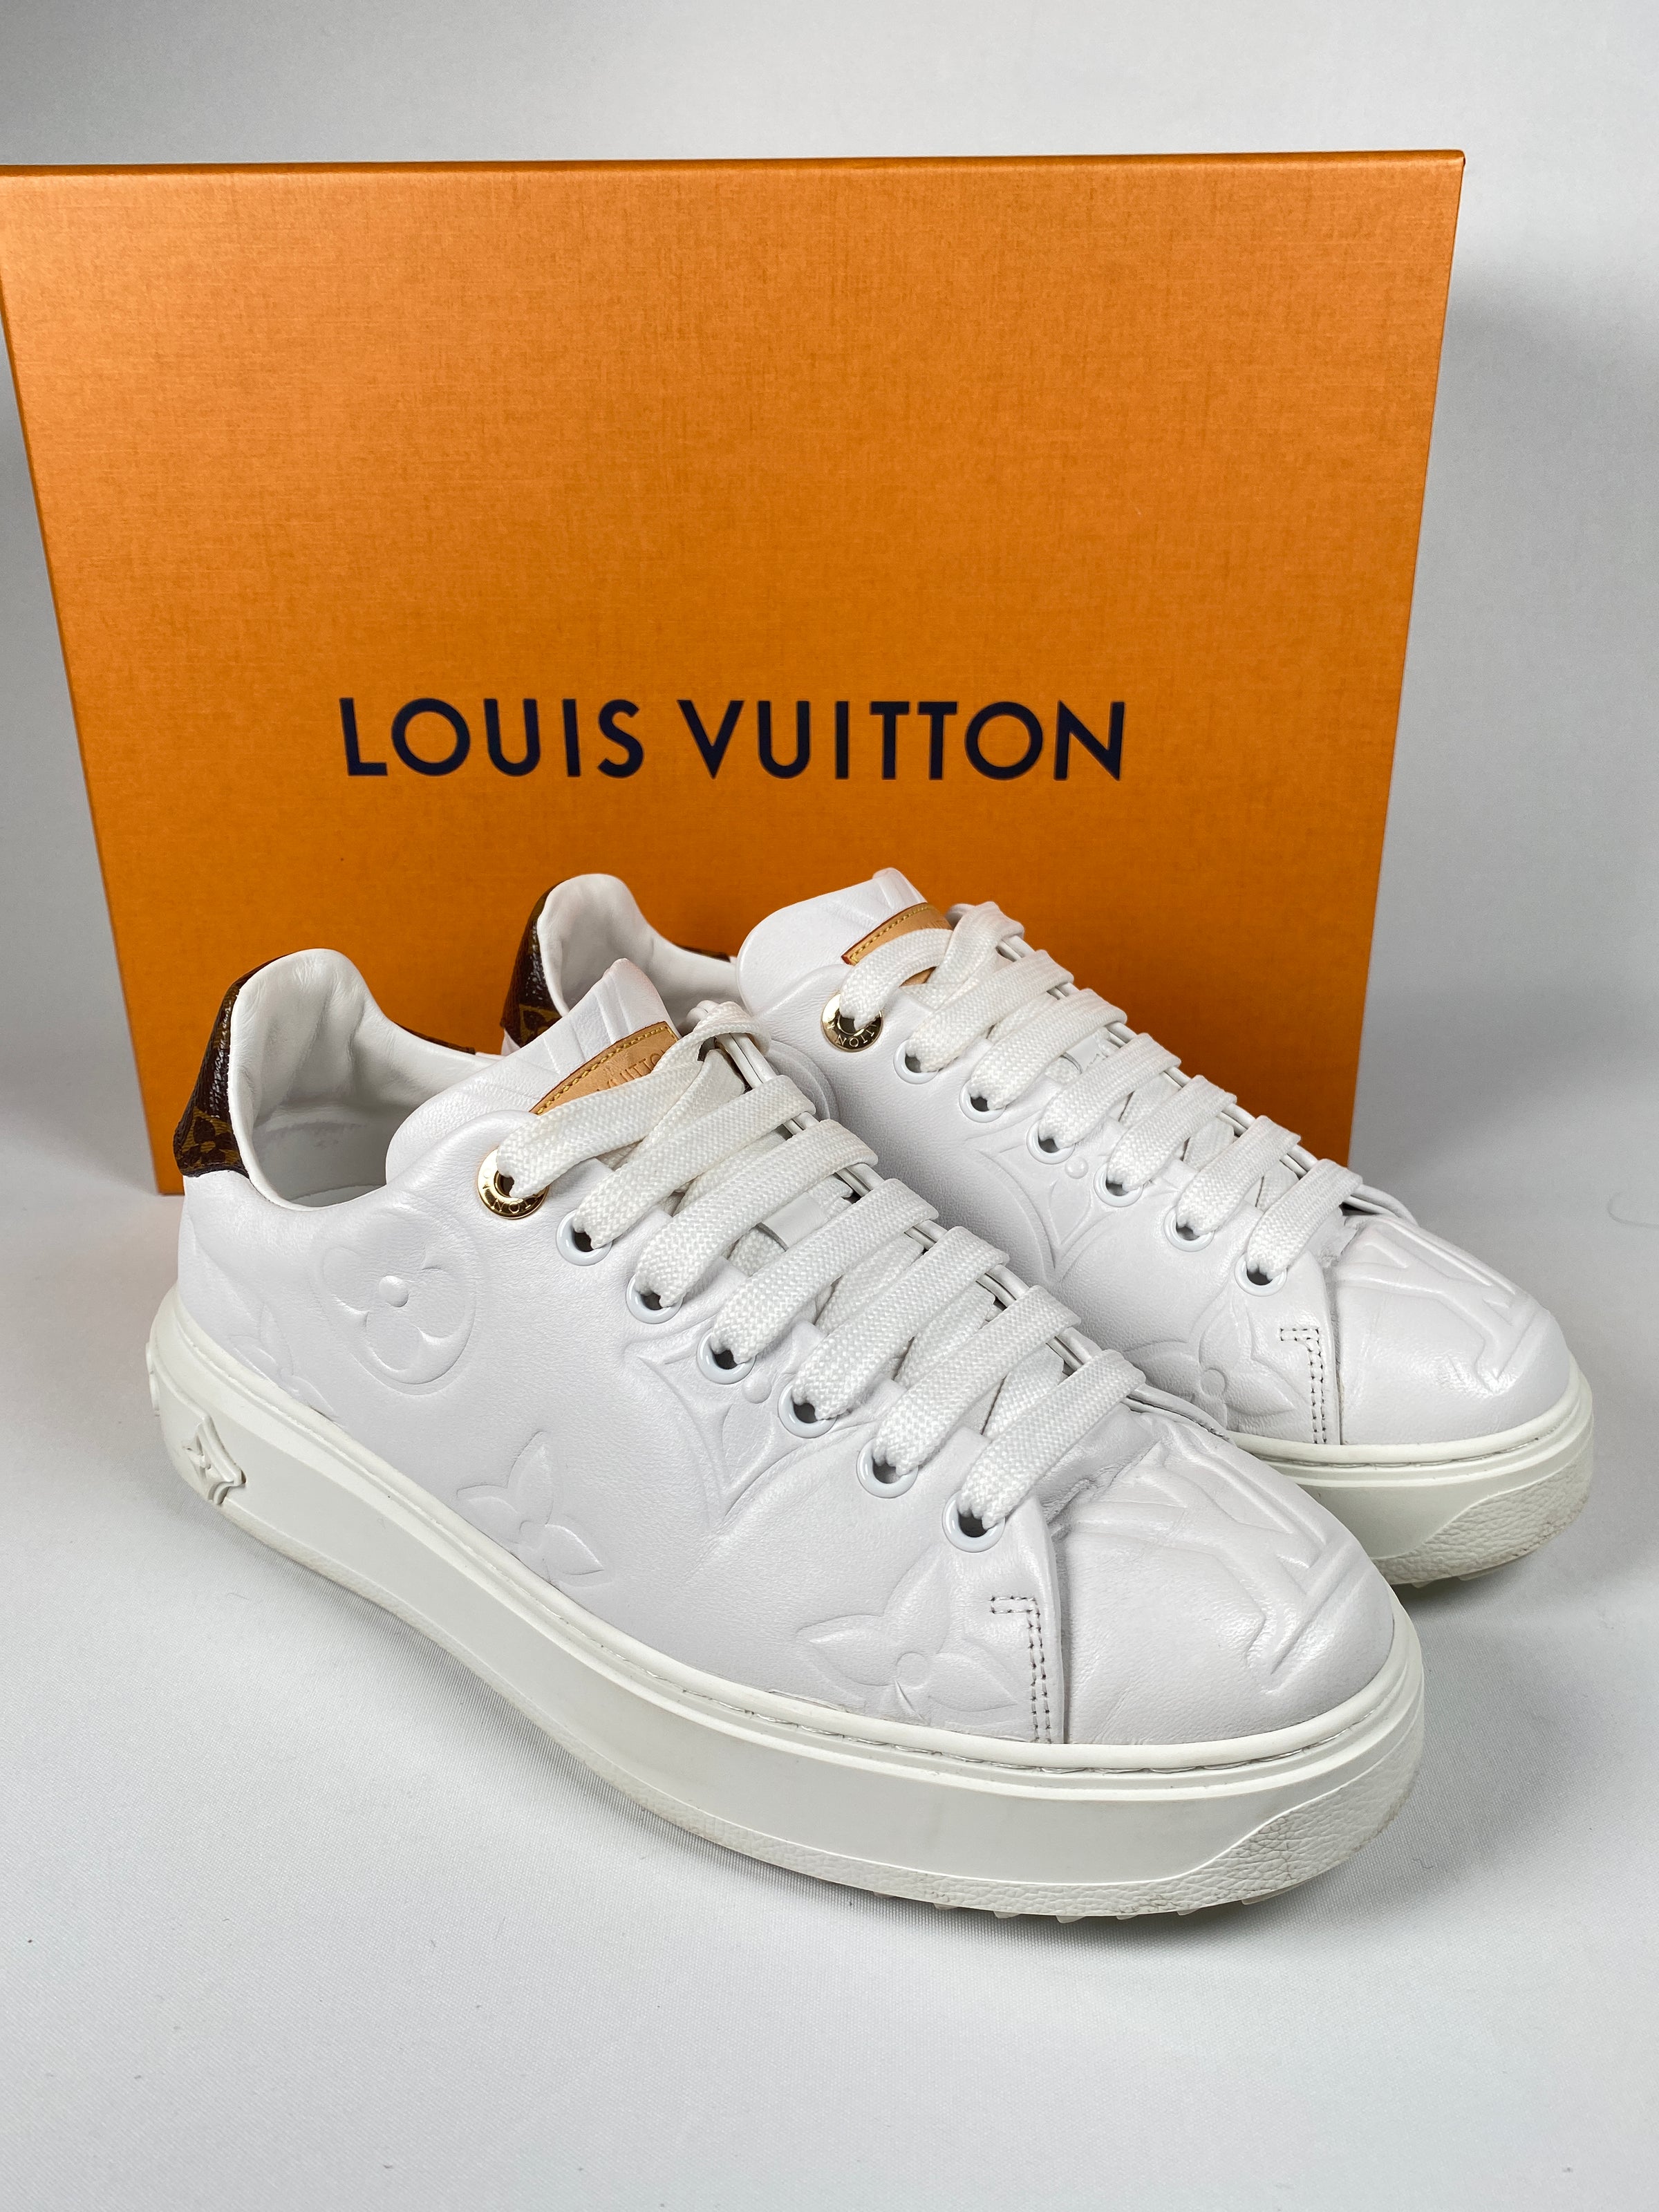 LOUIS VUITTON Time Out Sneaker White. Size 38